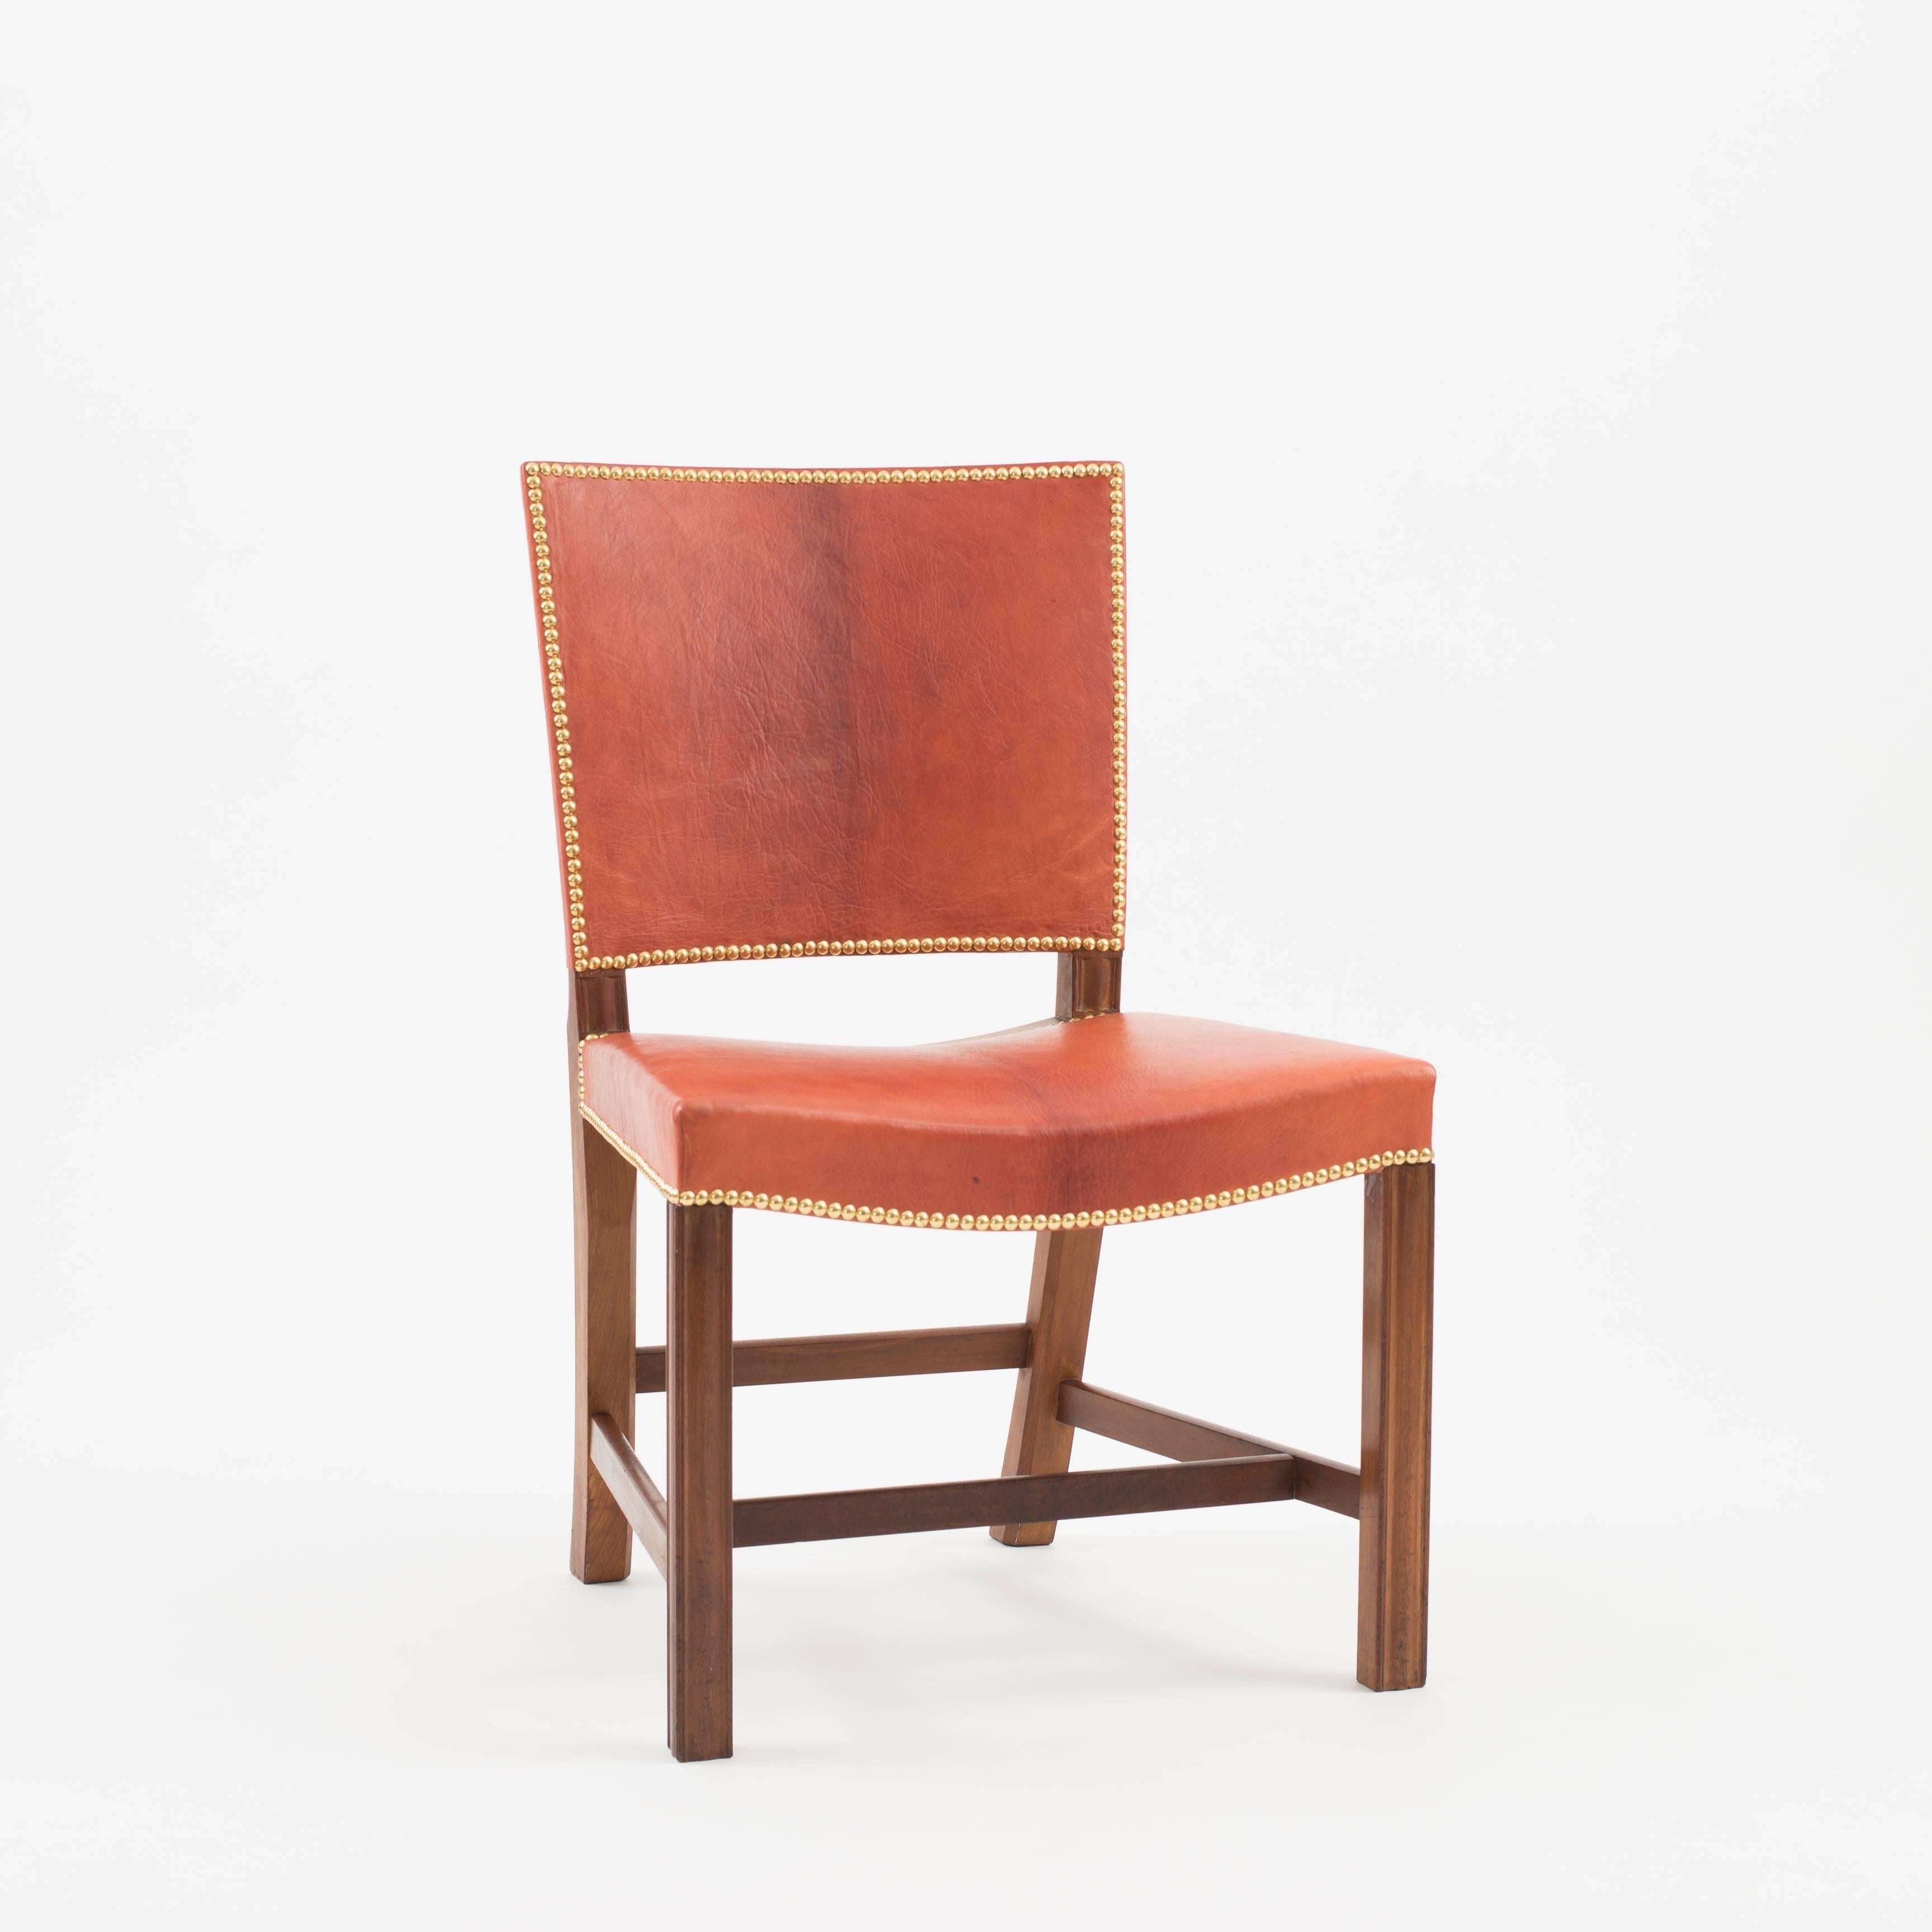 Kaare Klint Roter Stuhl, Rud. Rasmussen, 1930er Jahre (Dänisch) im Angebot